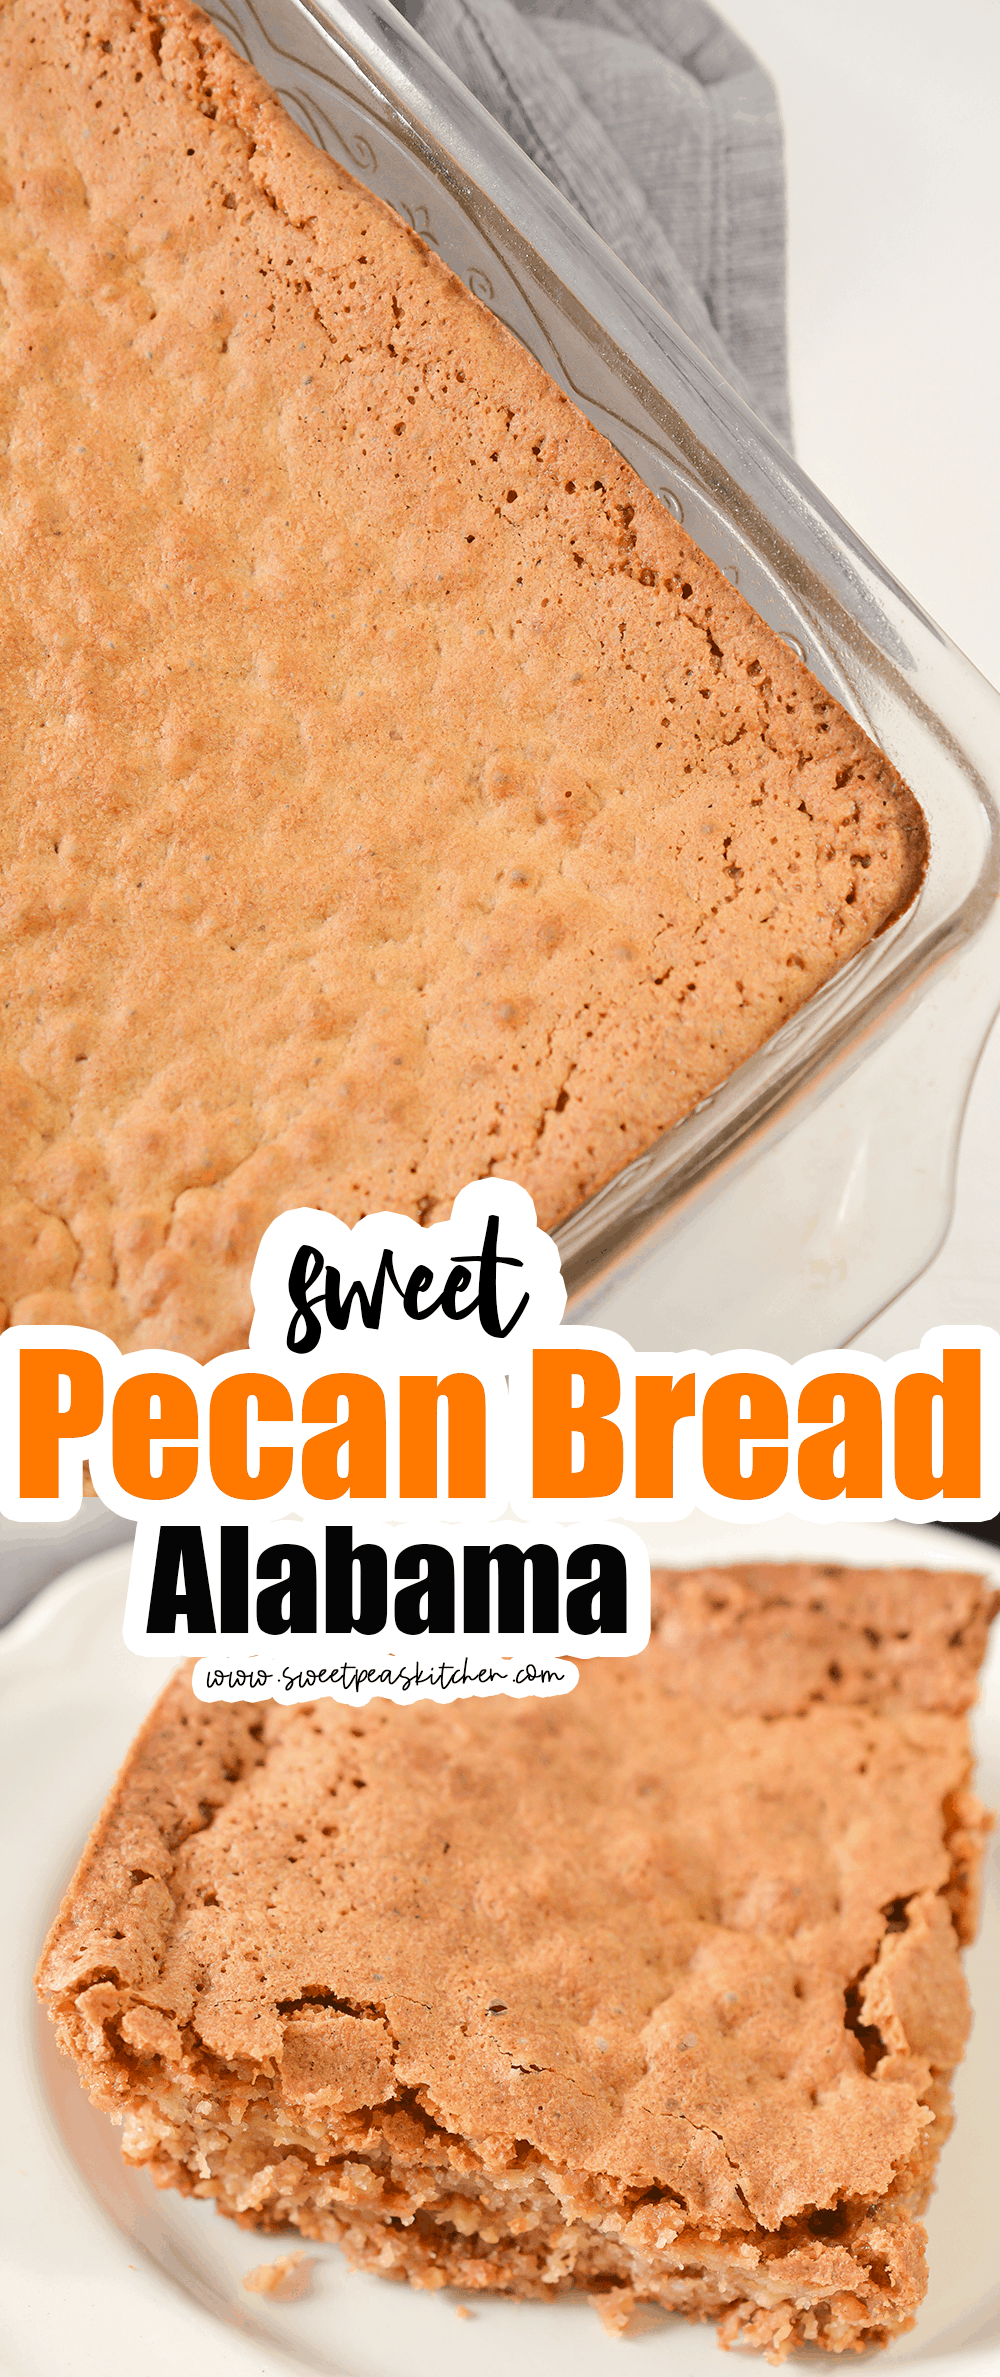 Sweet Alabama Pecan Bread